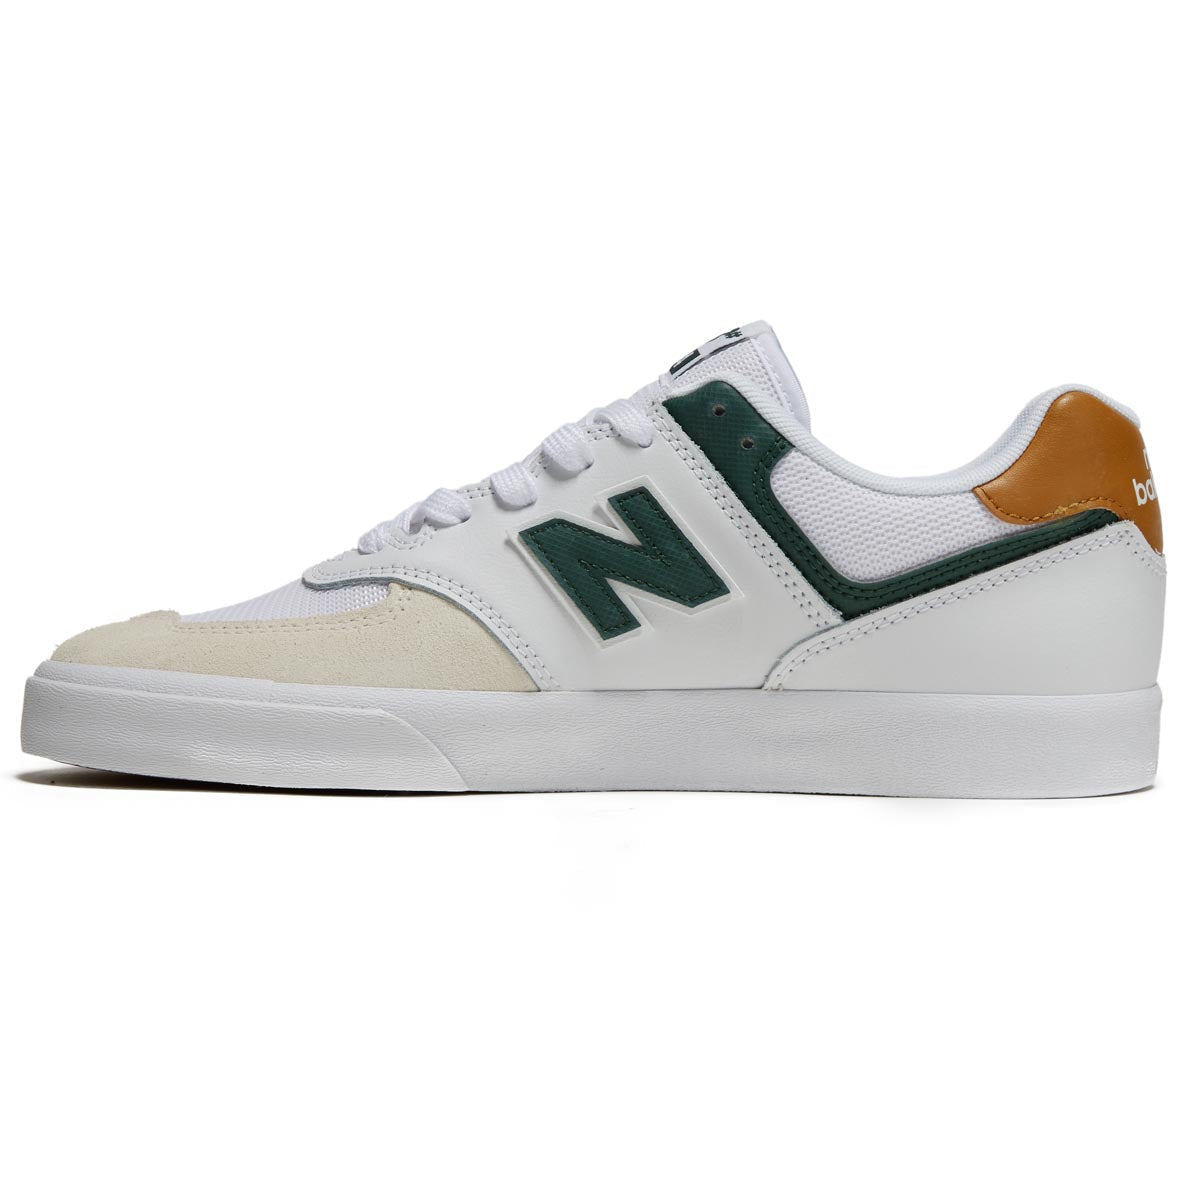 New Balance 574 Vulc Shoes - White image 2